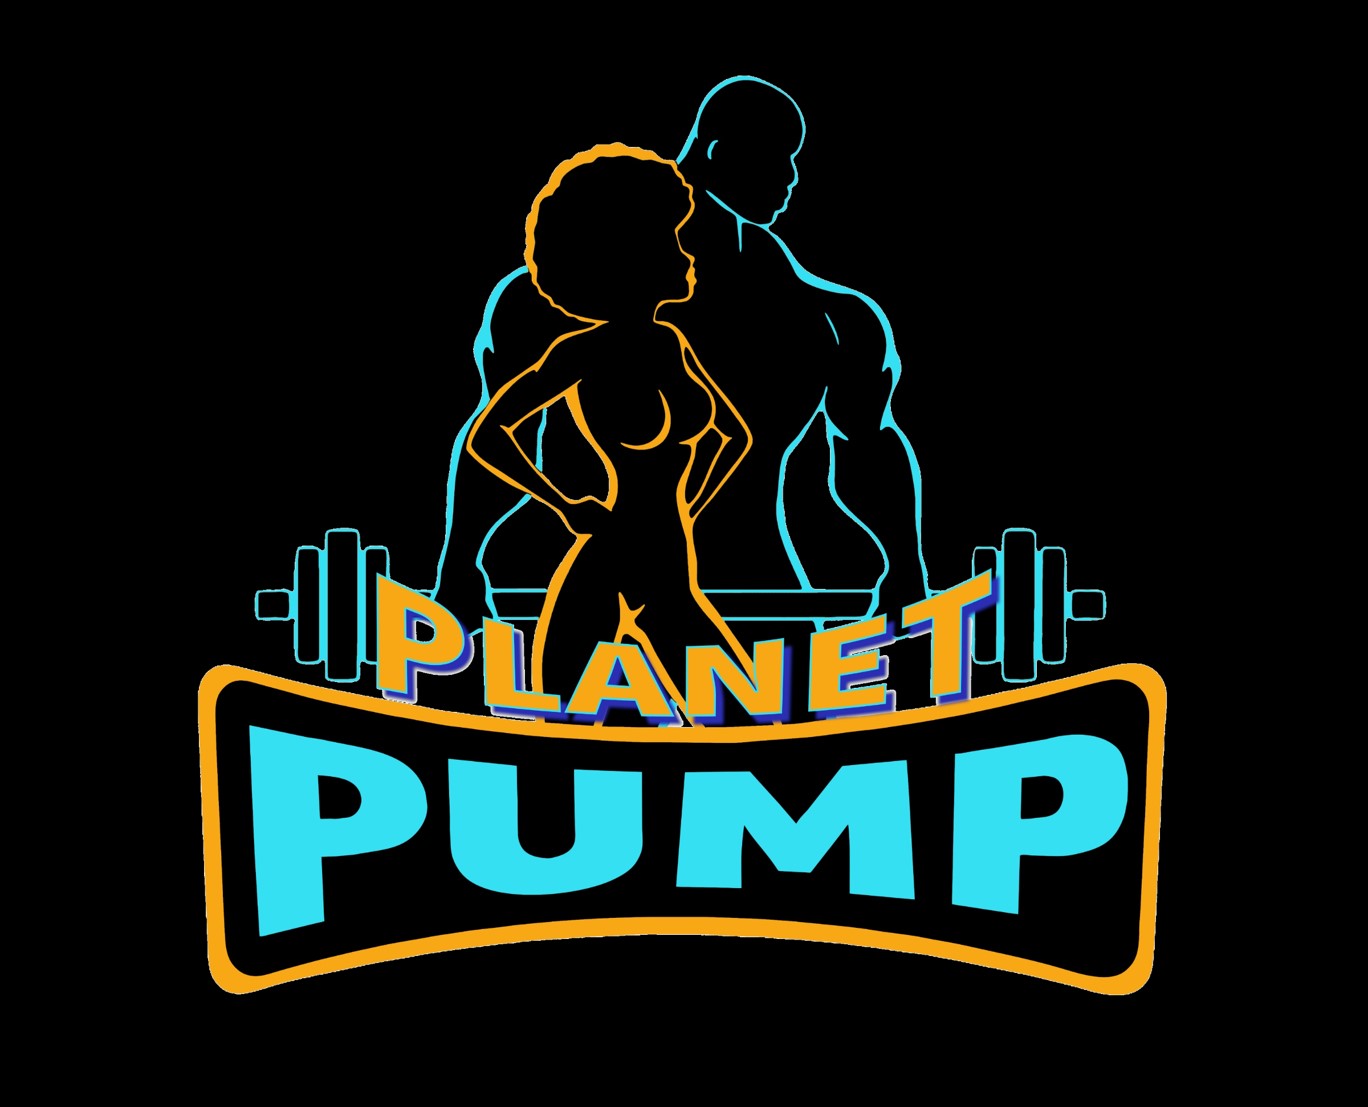 pump logo black